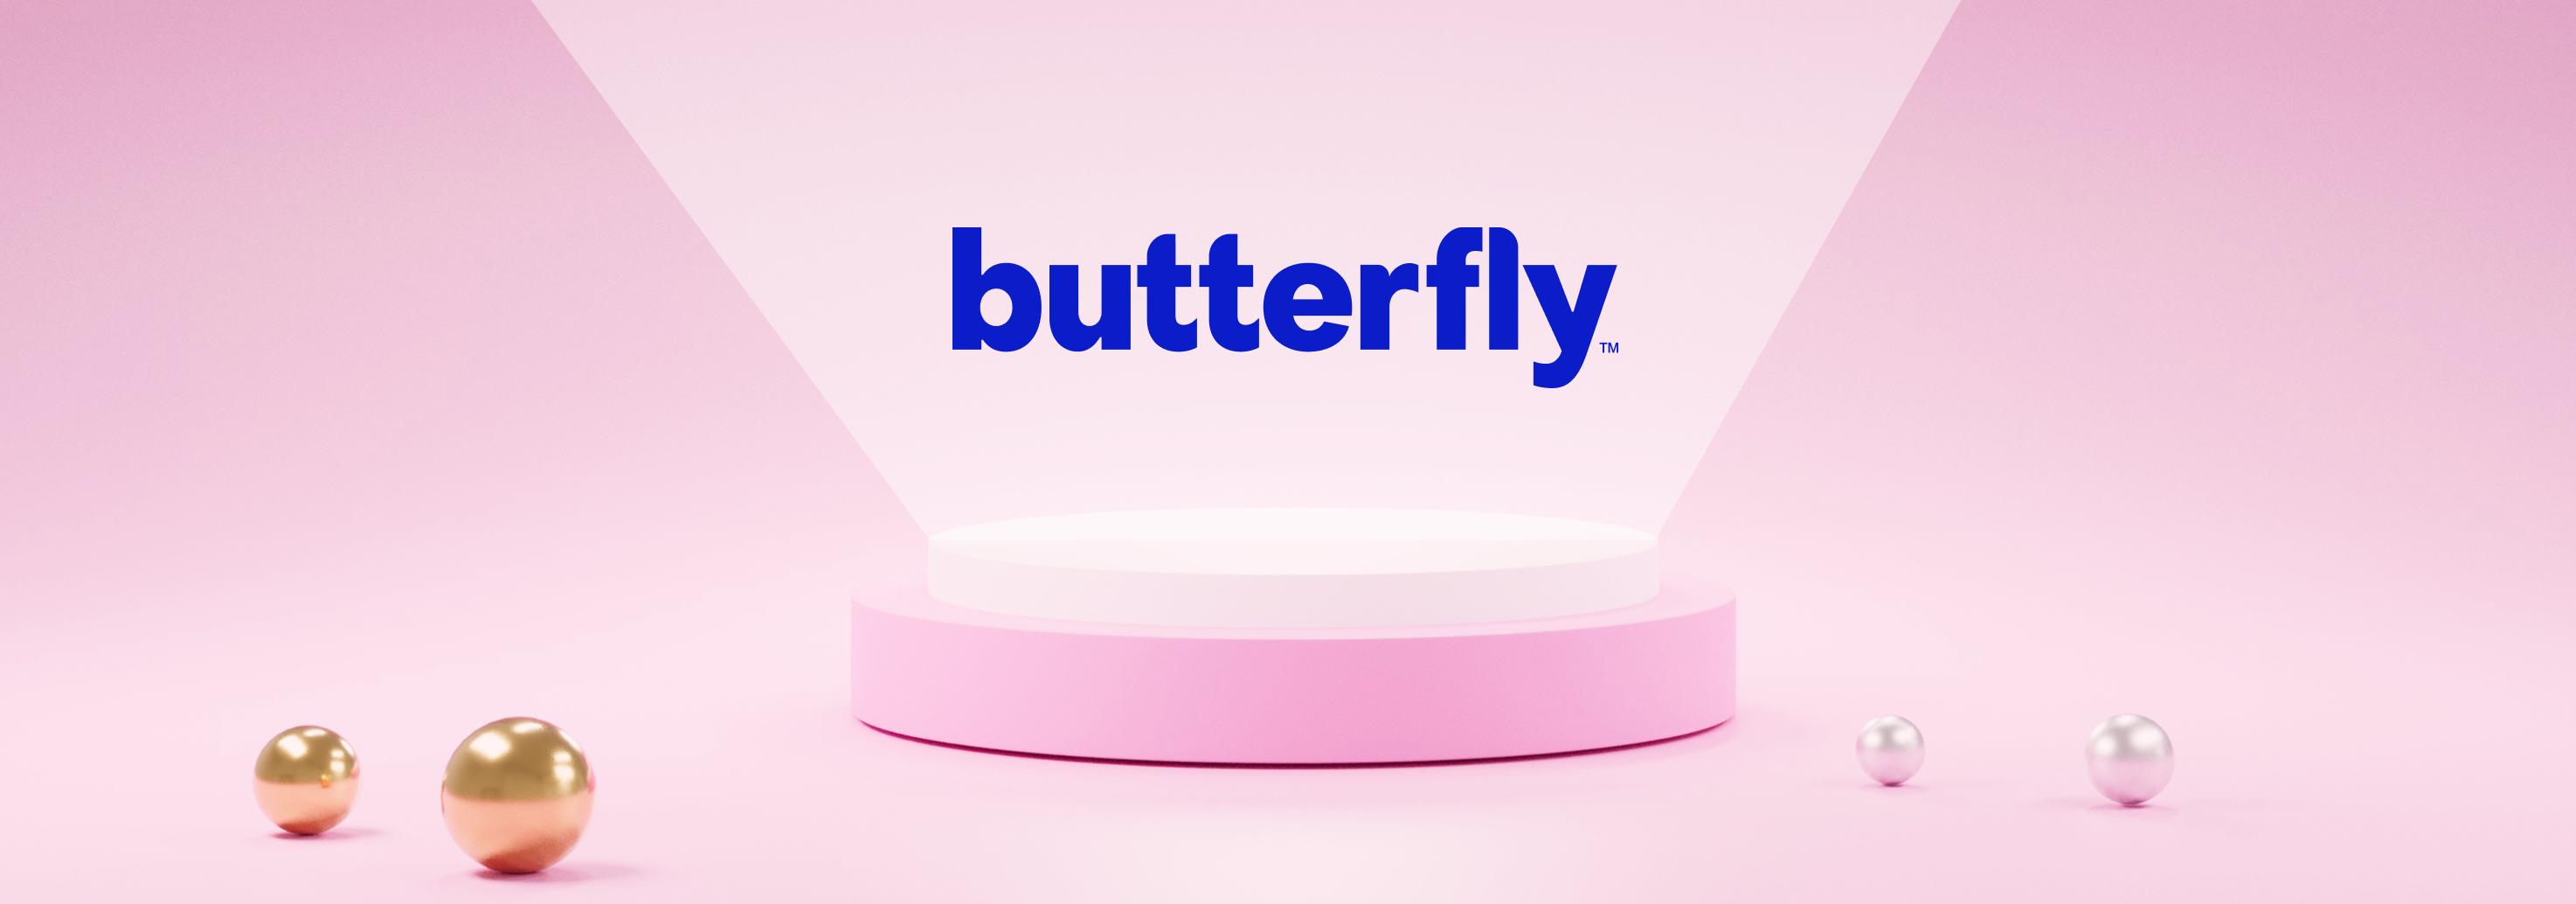 Butterfly logo on a pedestal